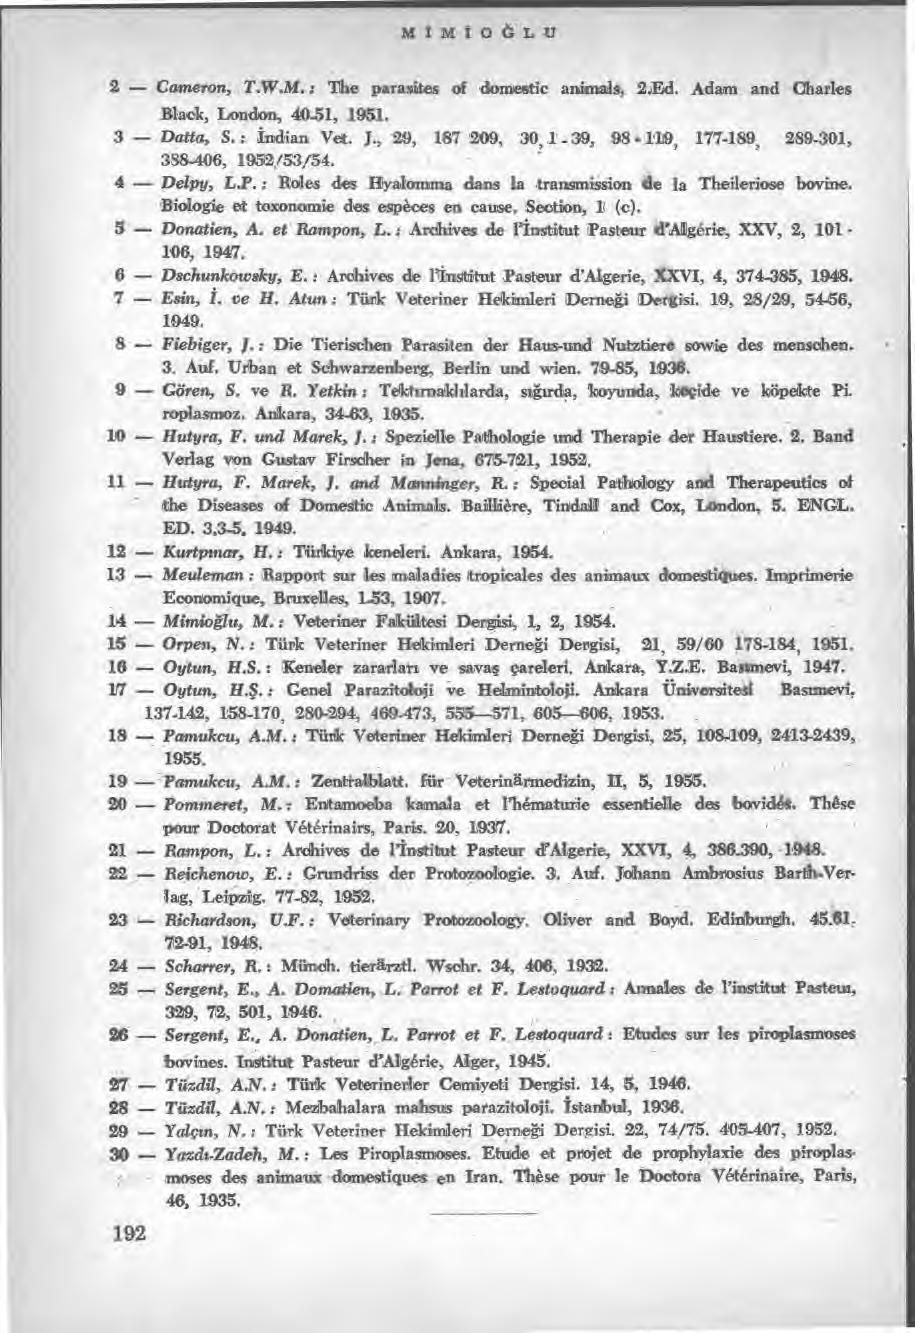 mimiodlu 2 Cameron, T.W.M. ; parasites of demestic animals, 2Md. Adam and Charles Blaek, London, 40-51, 1951. 3 Datta, S.: İndian Vet. J.